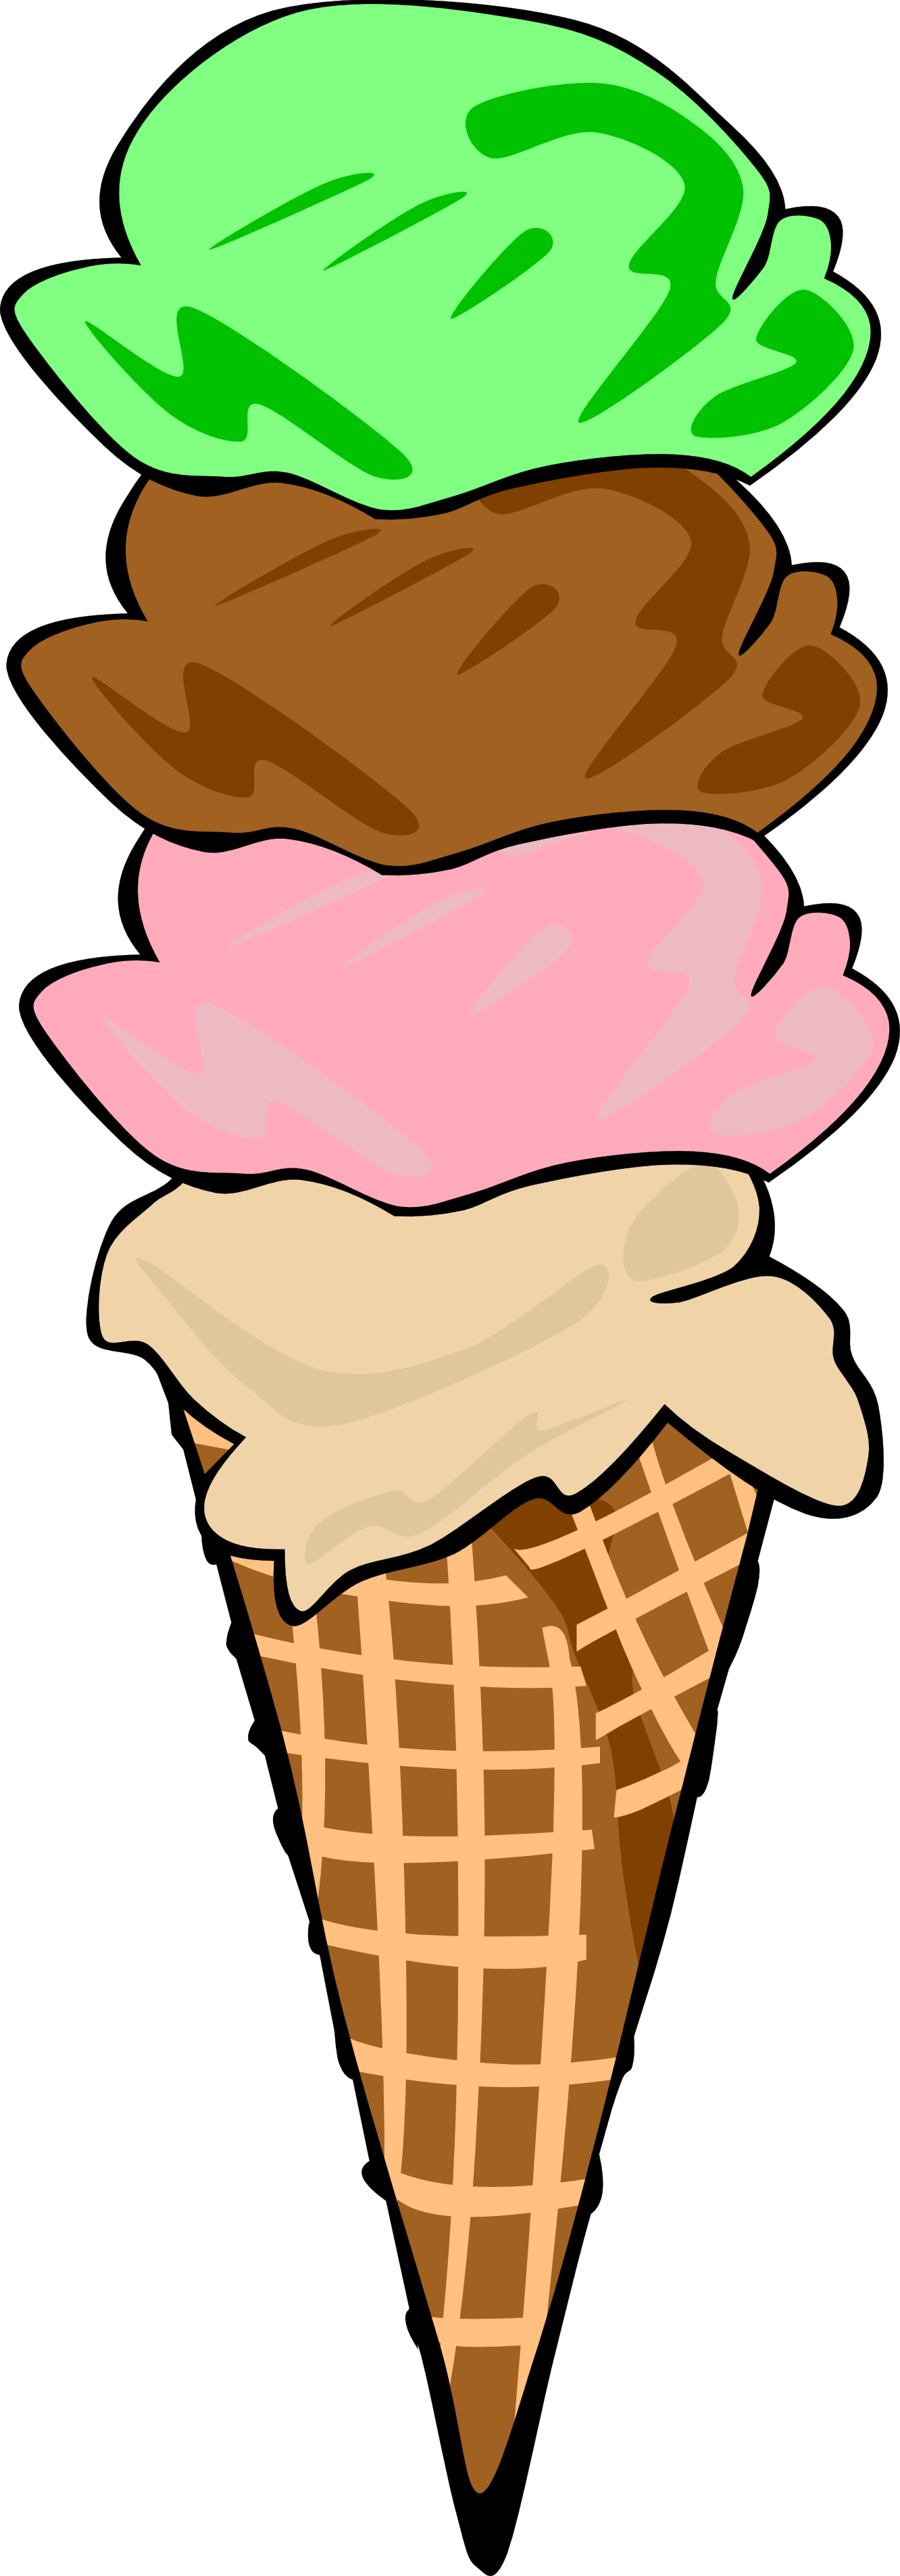 images-of-ice-cream-cones-cliparts-co